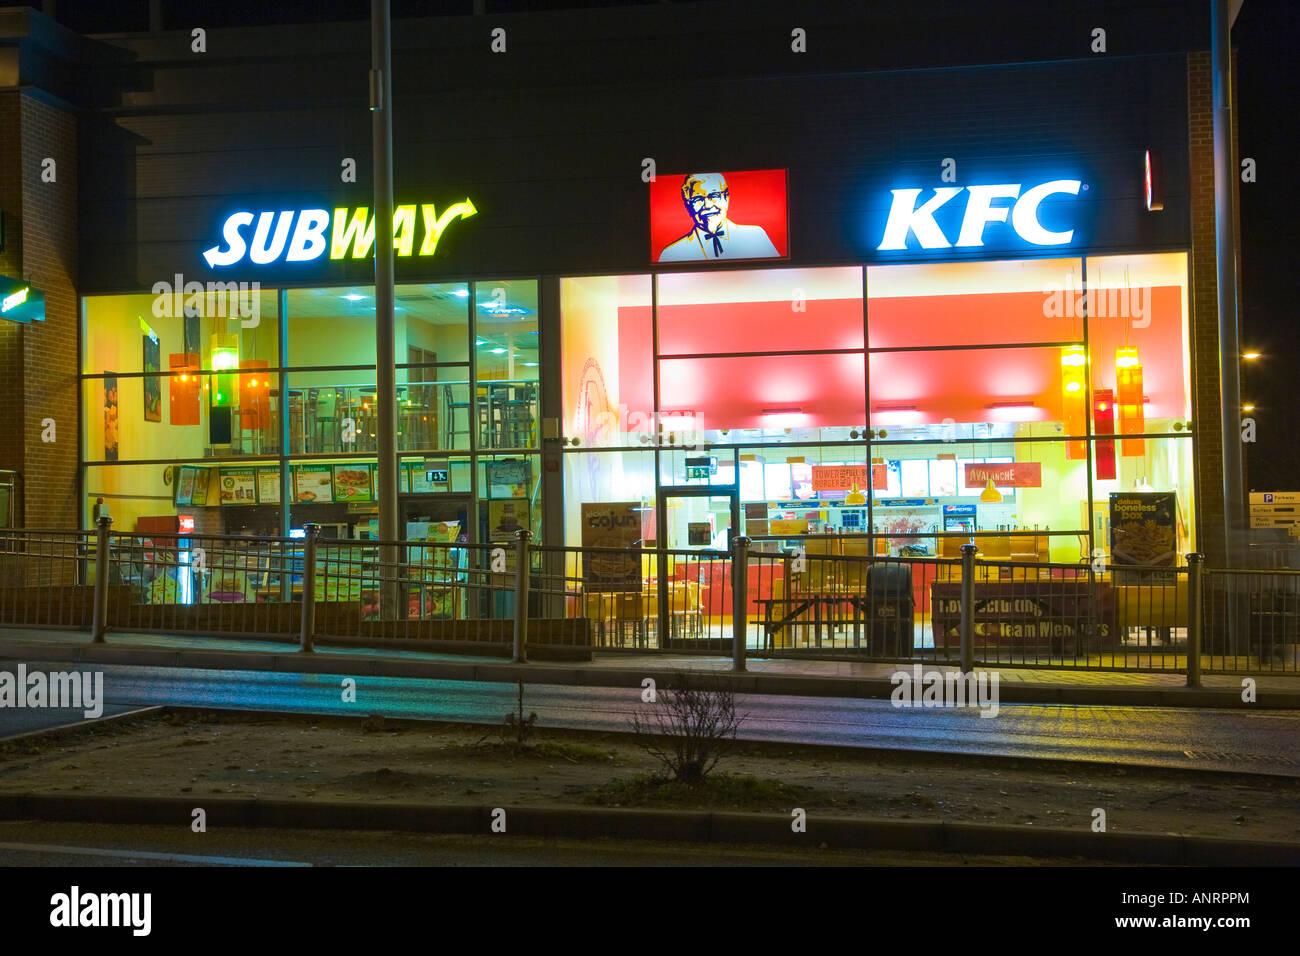 KFC and Subway food restaurants at night in Bury St Edmunds, UK Stock Photo